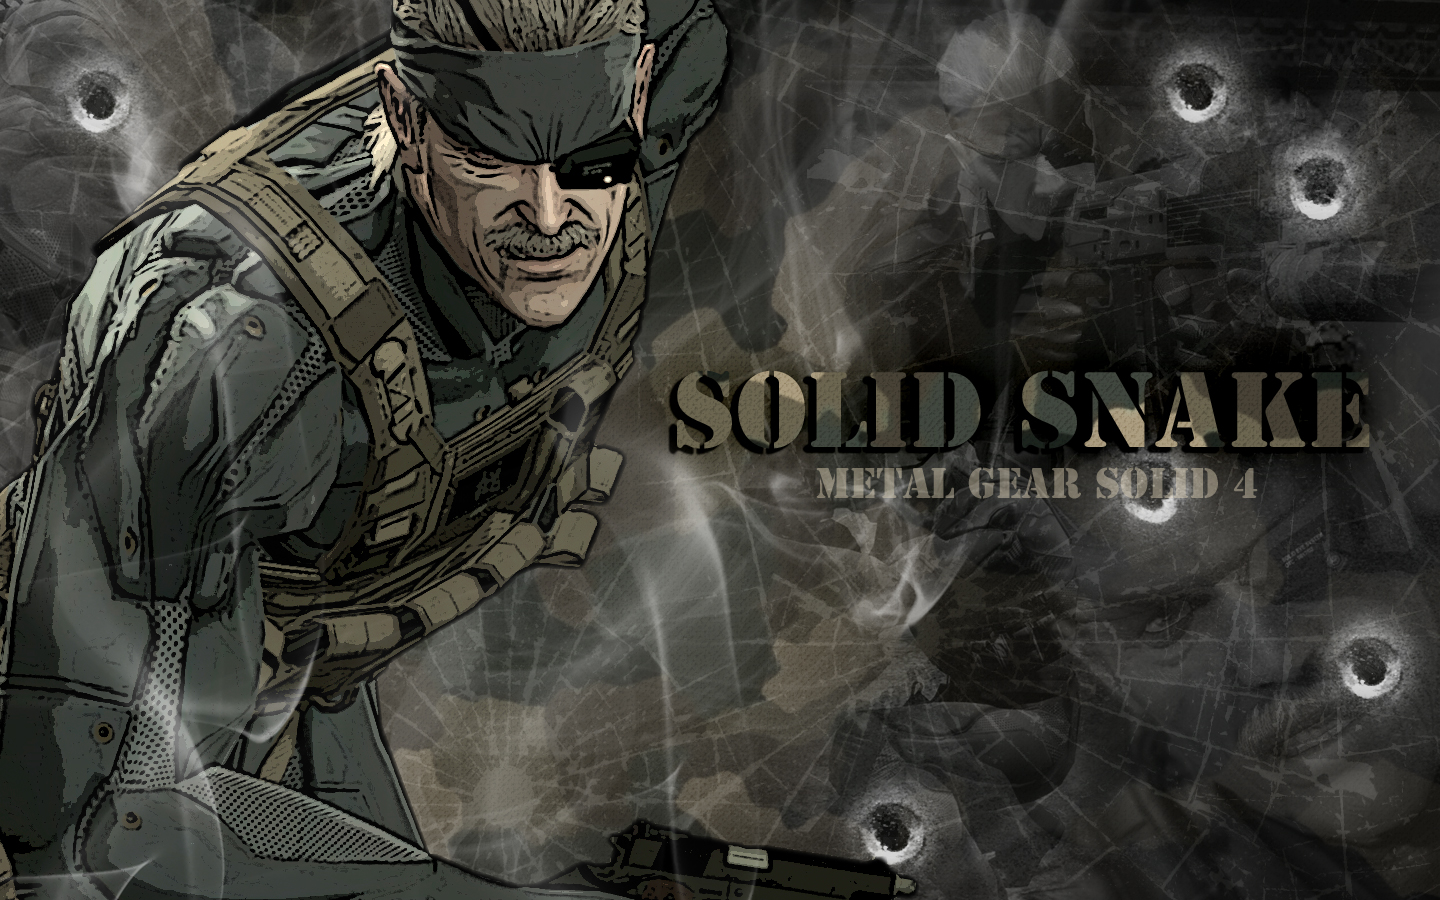 Solid Snake MGS4 Wallpaper by Hallucination-Walker on DeviantArt